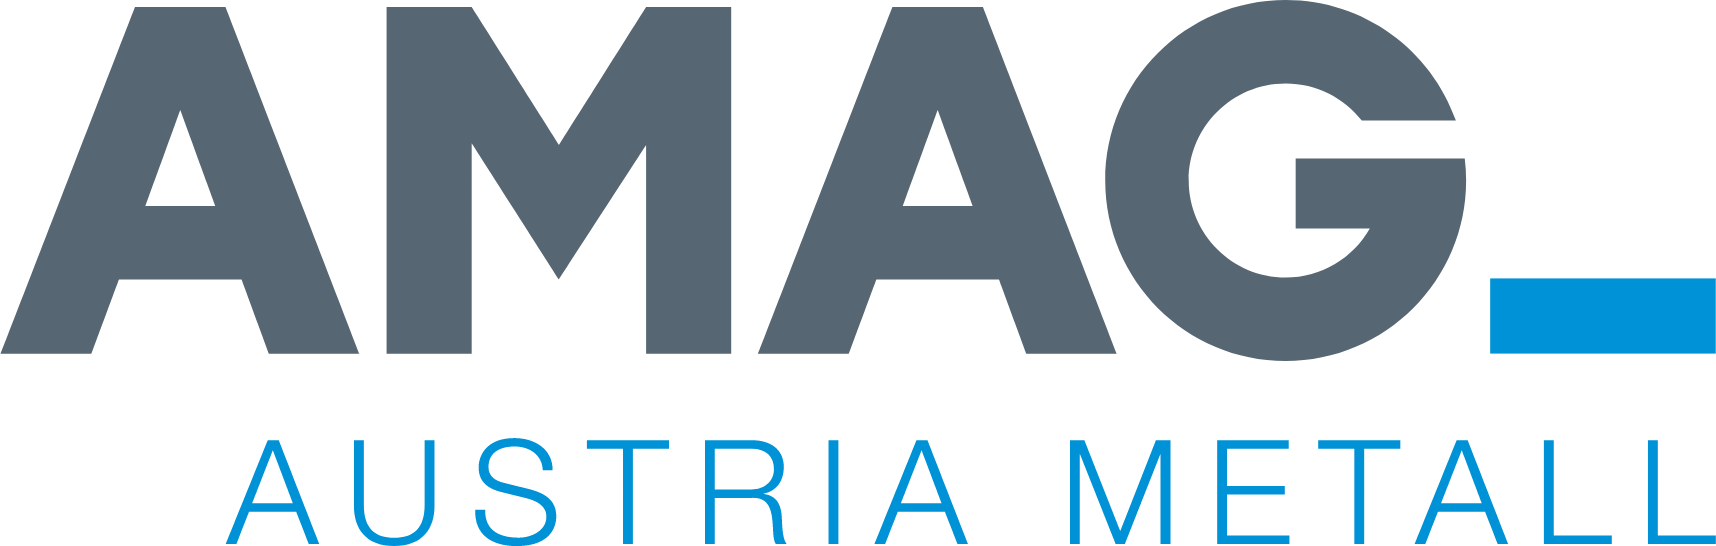 AMAG Austria Metall logo in transparent PNG format